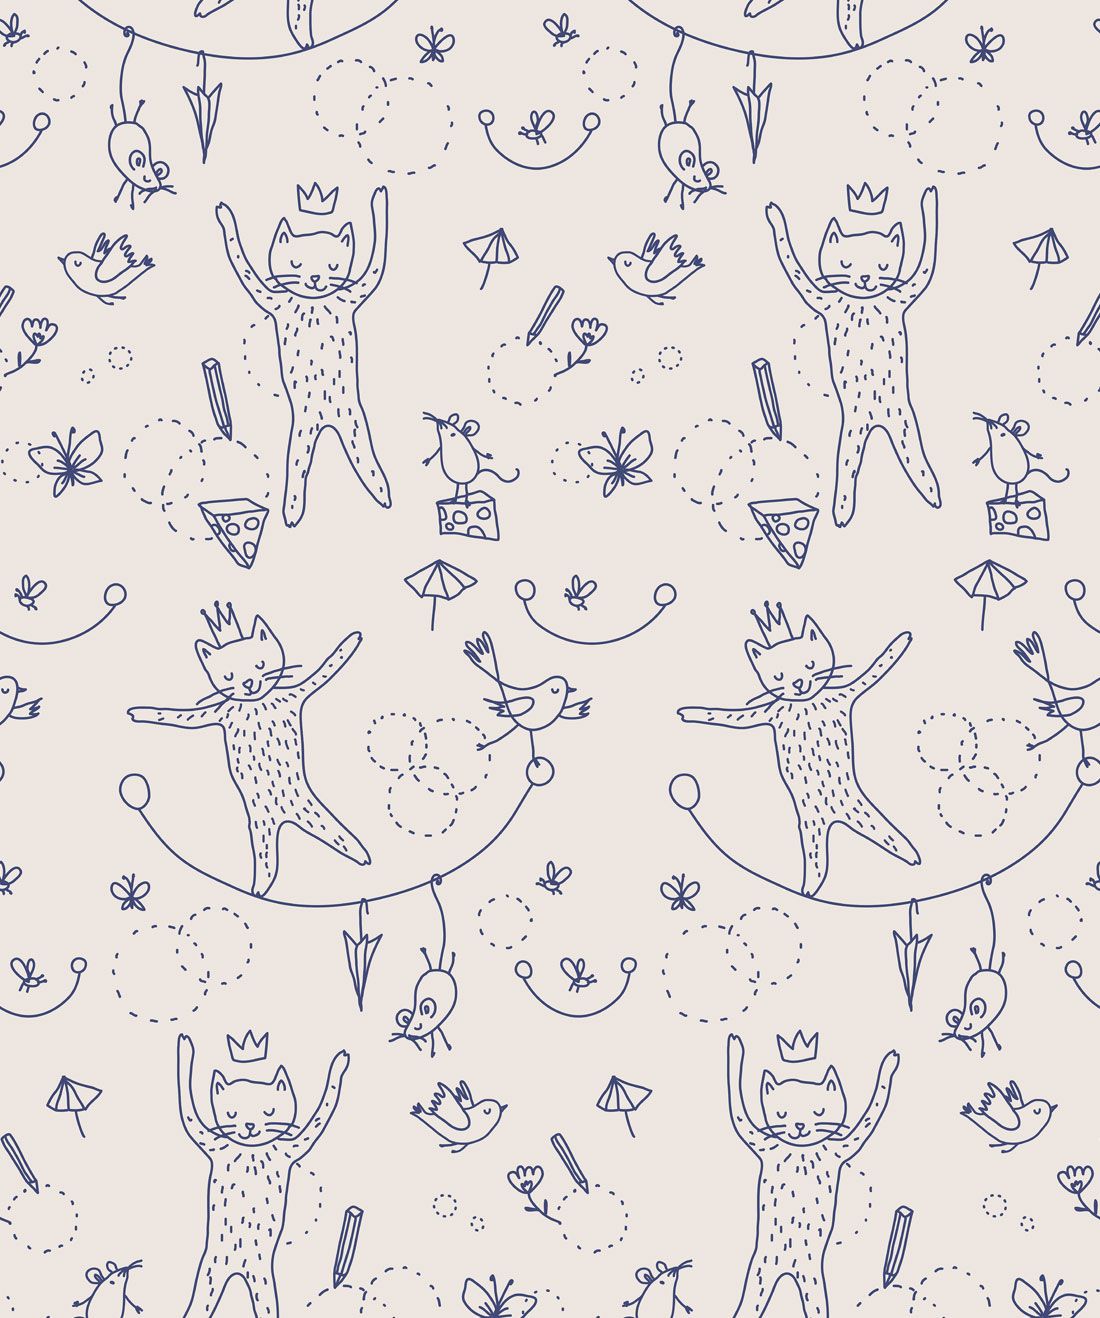 Mice & Cats Wallpaper